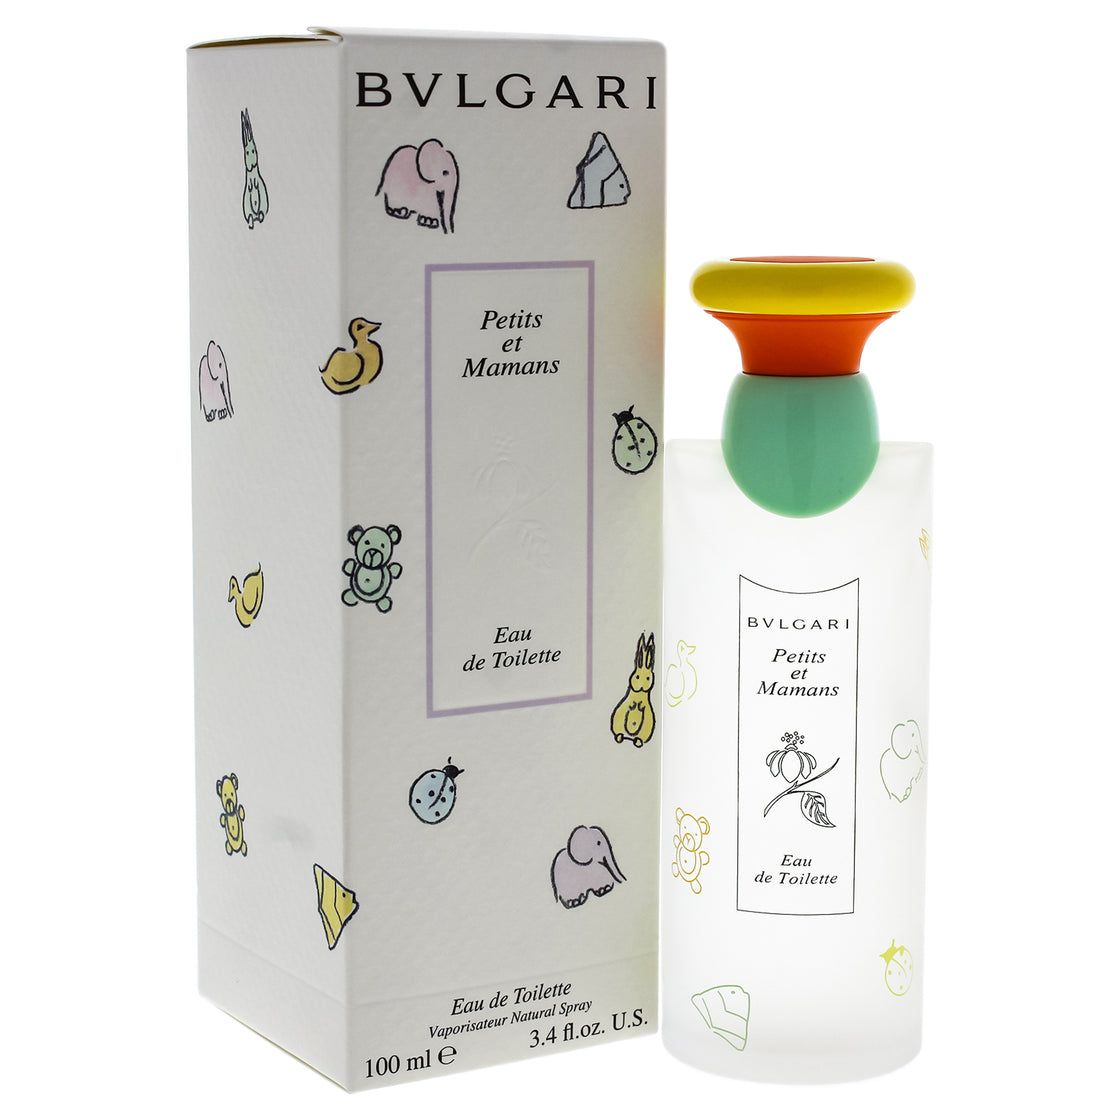 Bvlgari Petits et Mamans by Bvlgari for Women - 3.4 oz EDT Spray